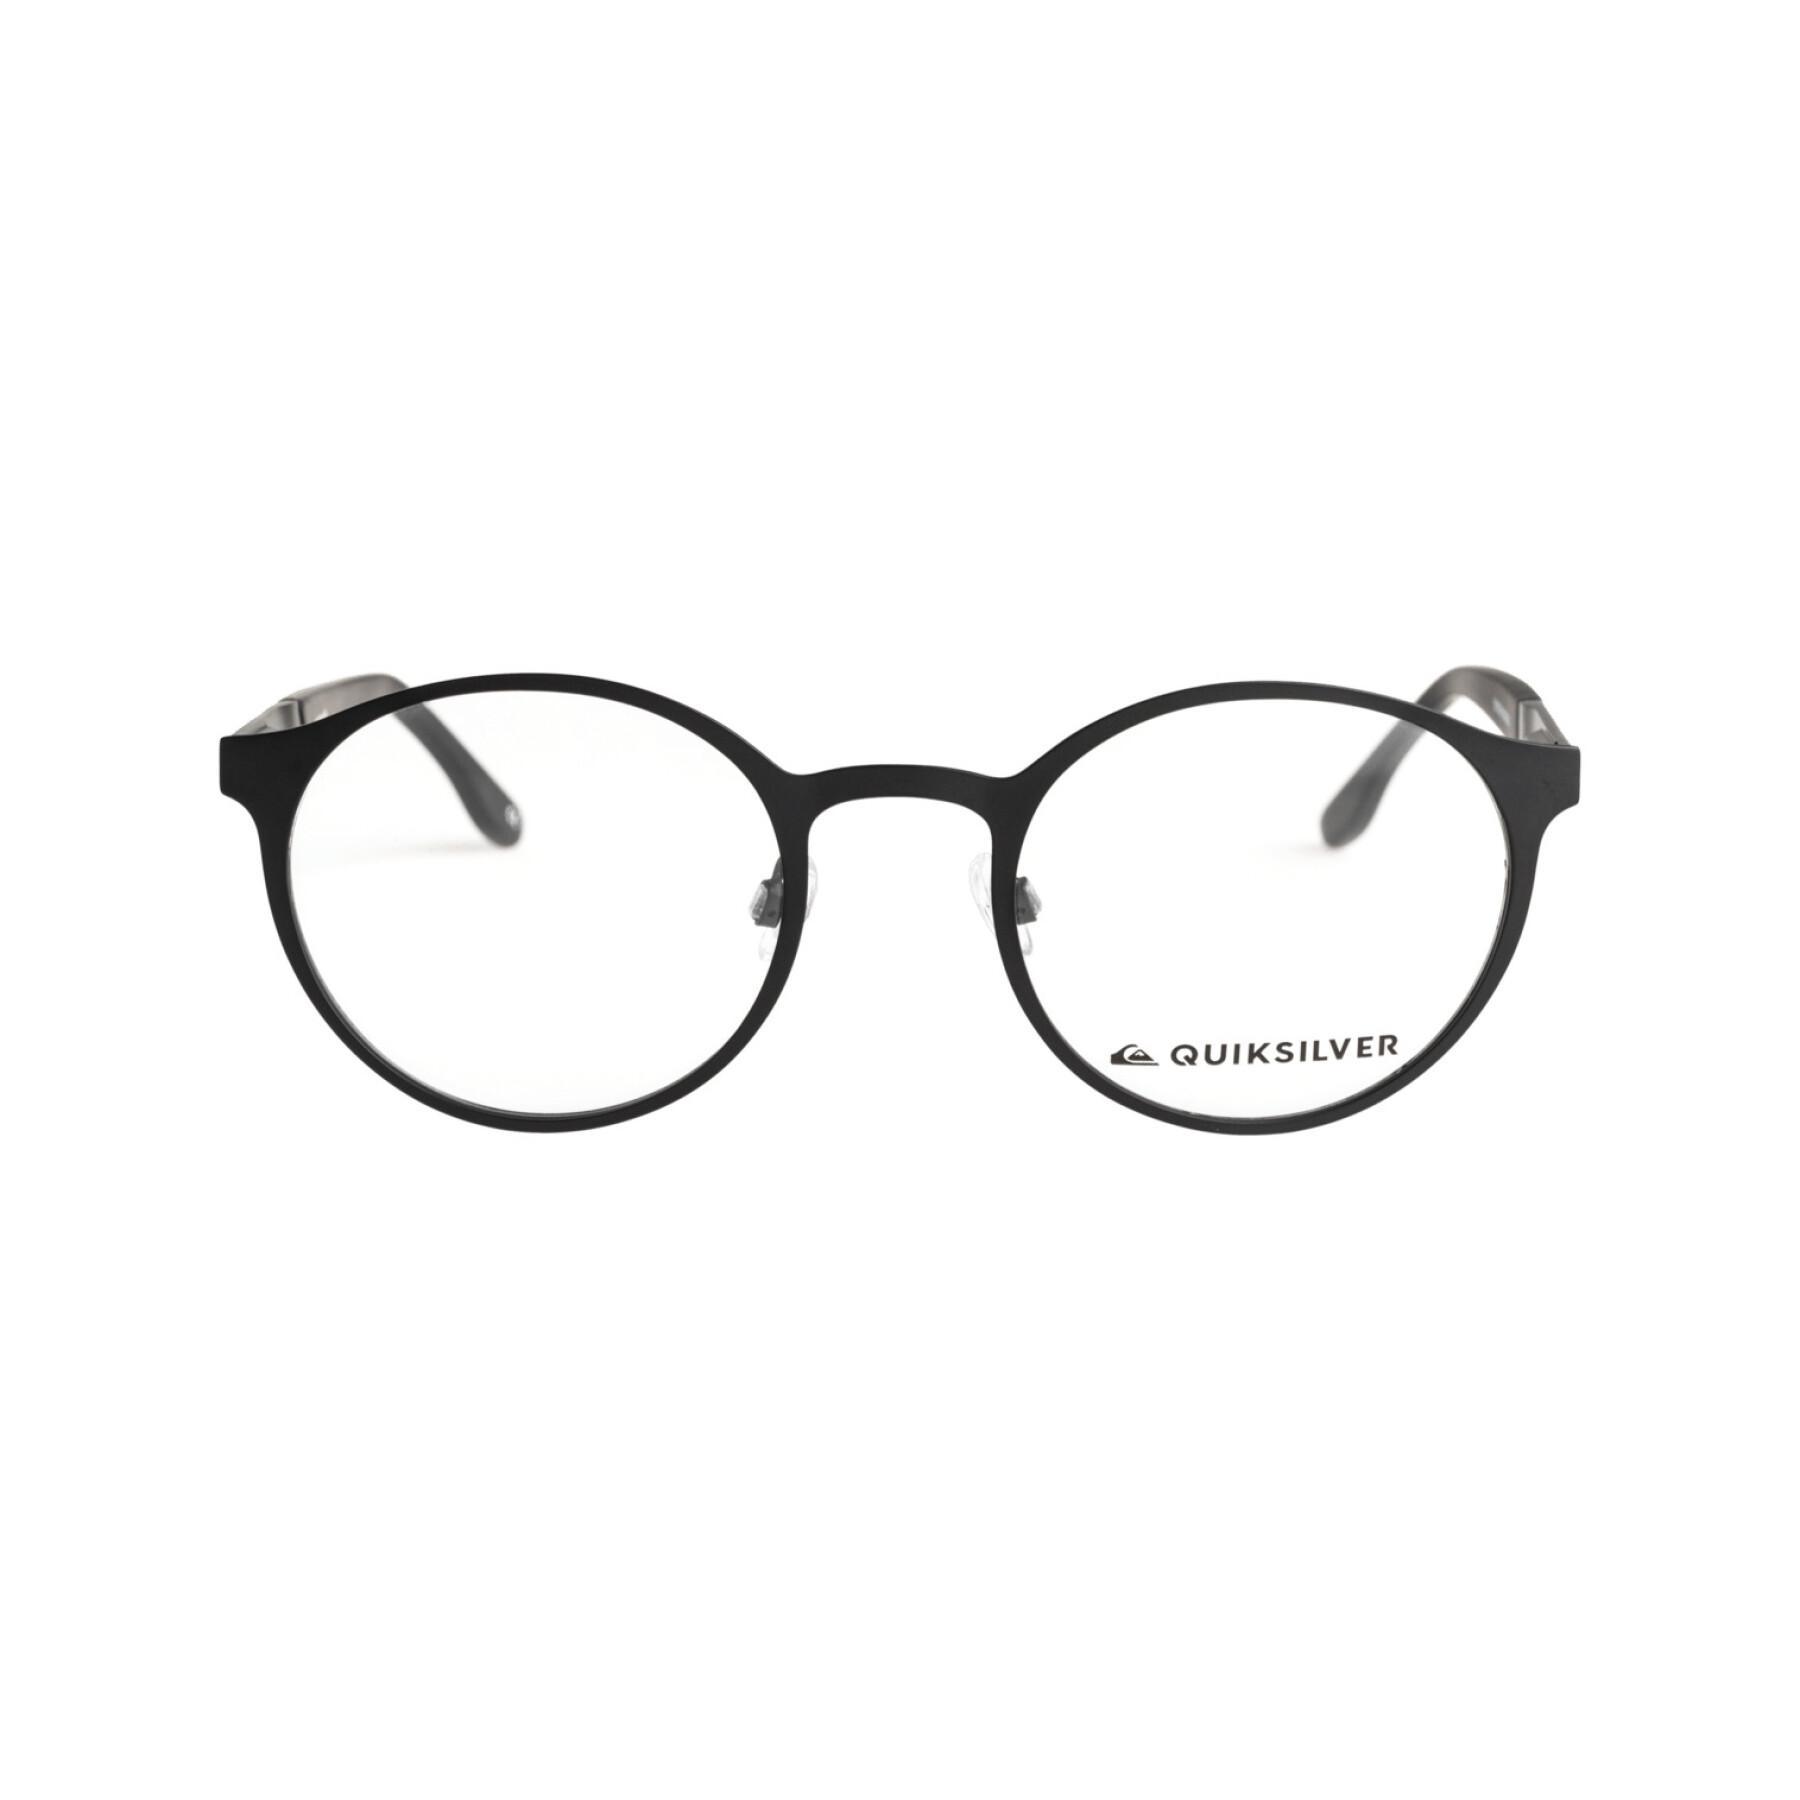 I-Round Quiksilver Accessories - Accessories Eyeglasses Fashion -